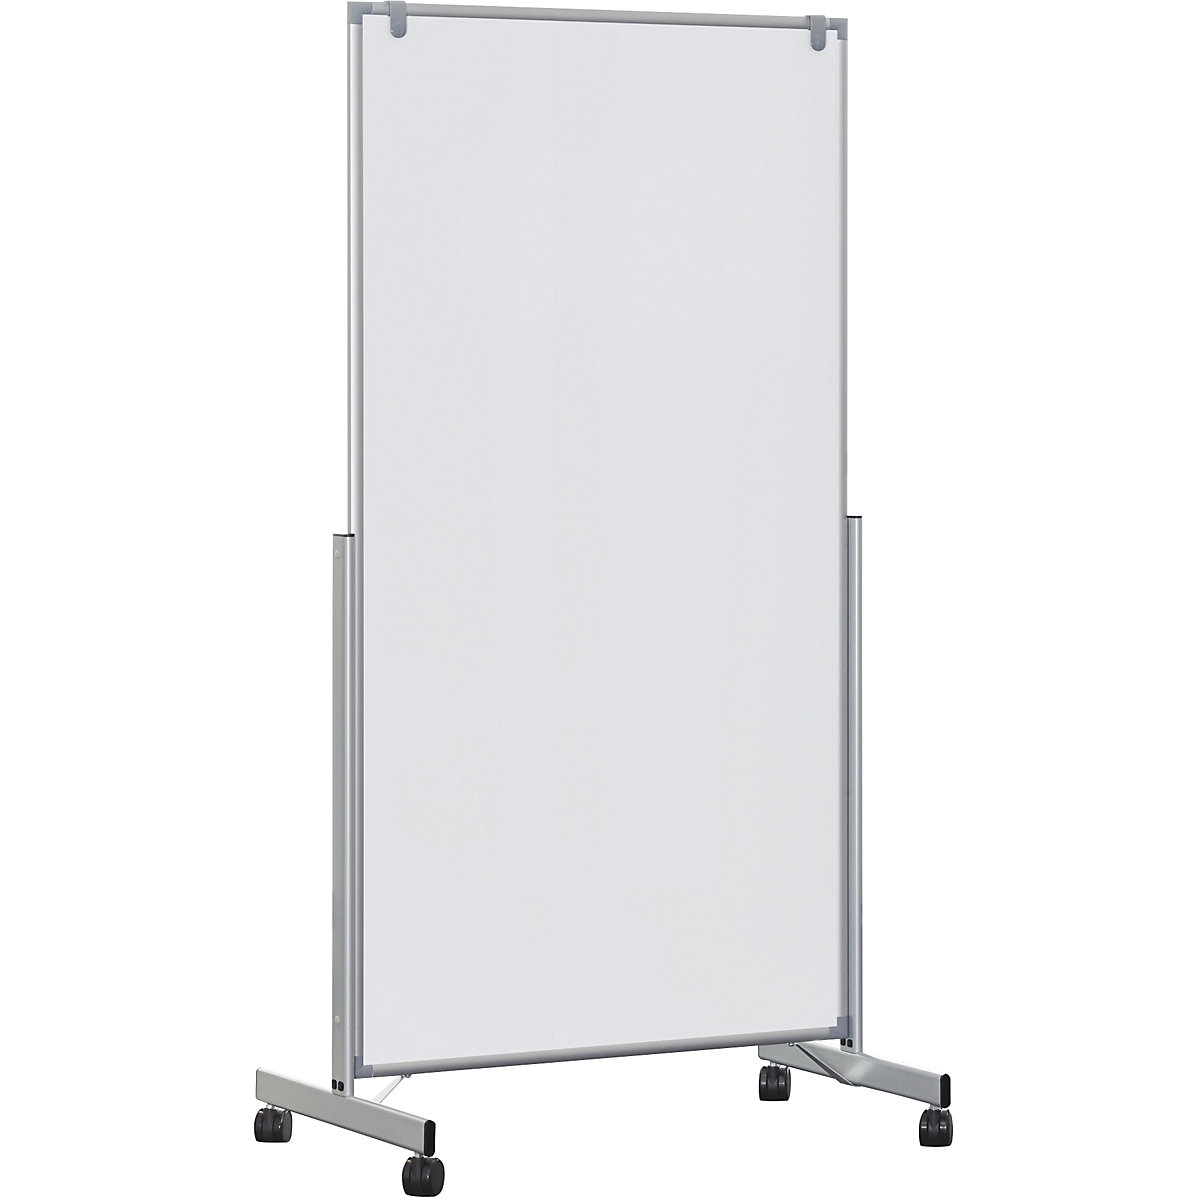 Panou whiteboard MAULpro easy2move, mobil – MAUL, î. x ad. 1965 x 640 mm, argintiu aluminiu, î. x lăț. panou 1800 x 1000 mm-3